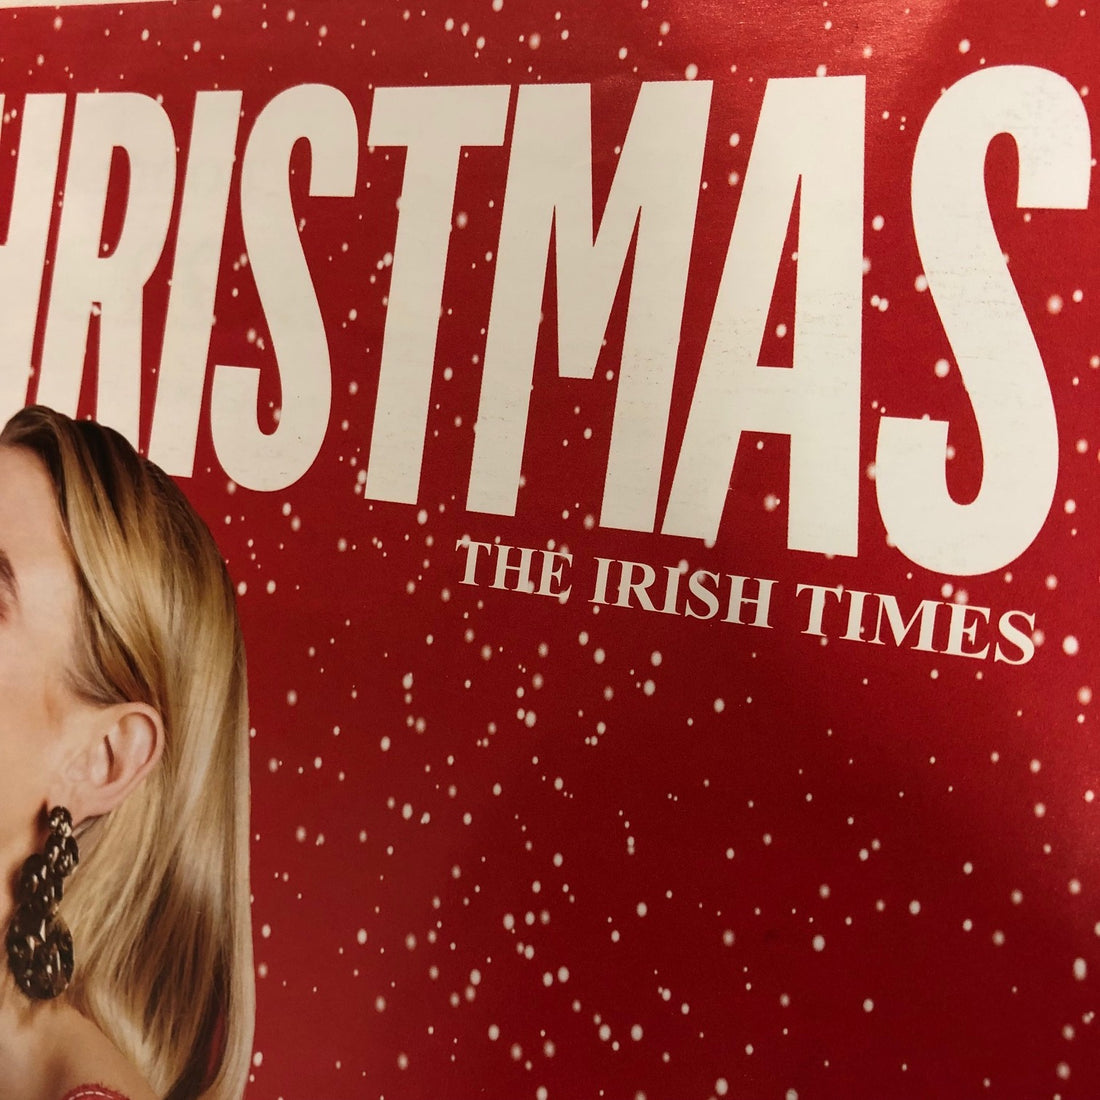 The Irish Times "It's Christmas", Nov 2018